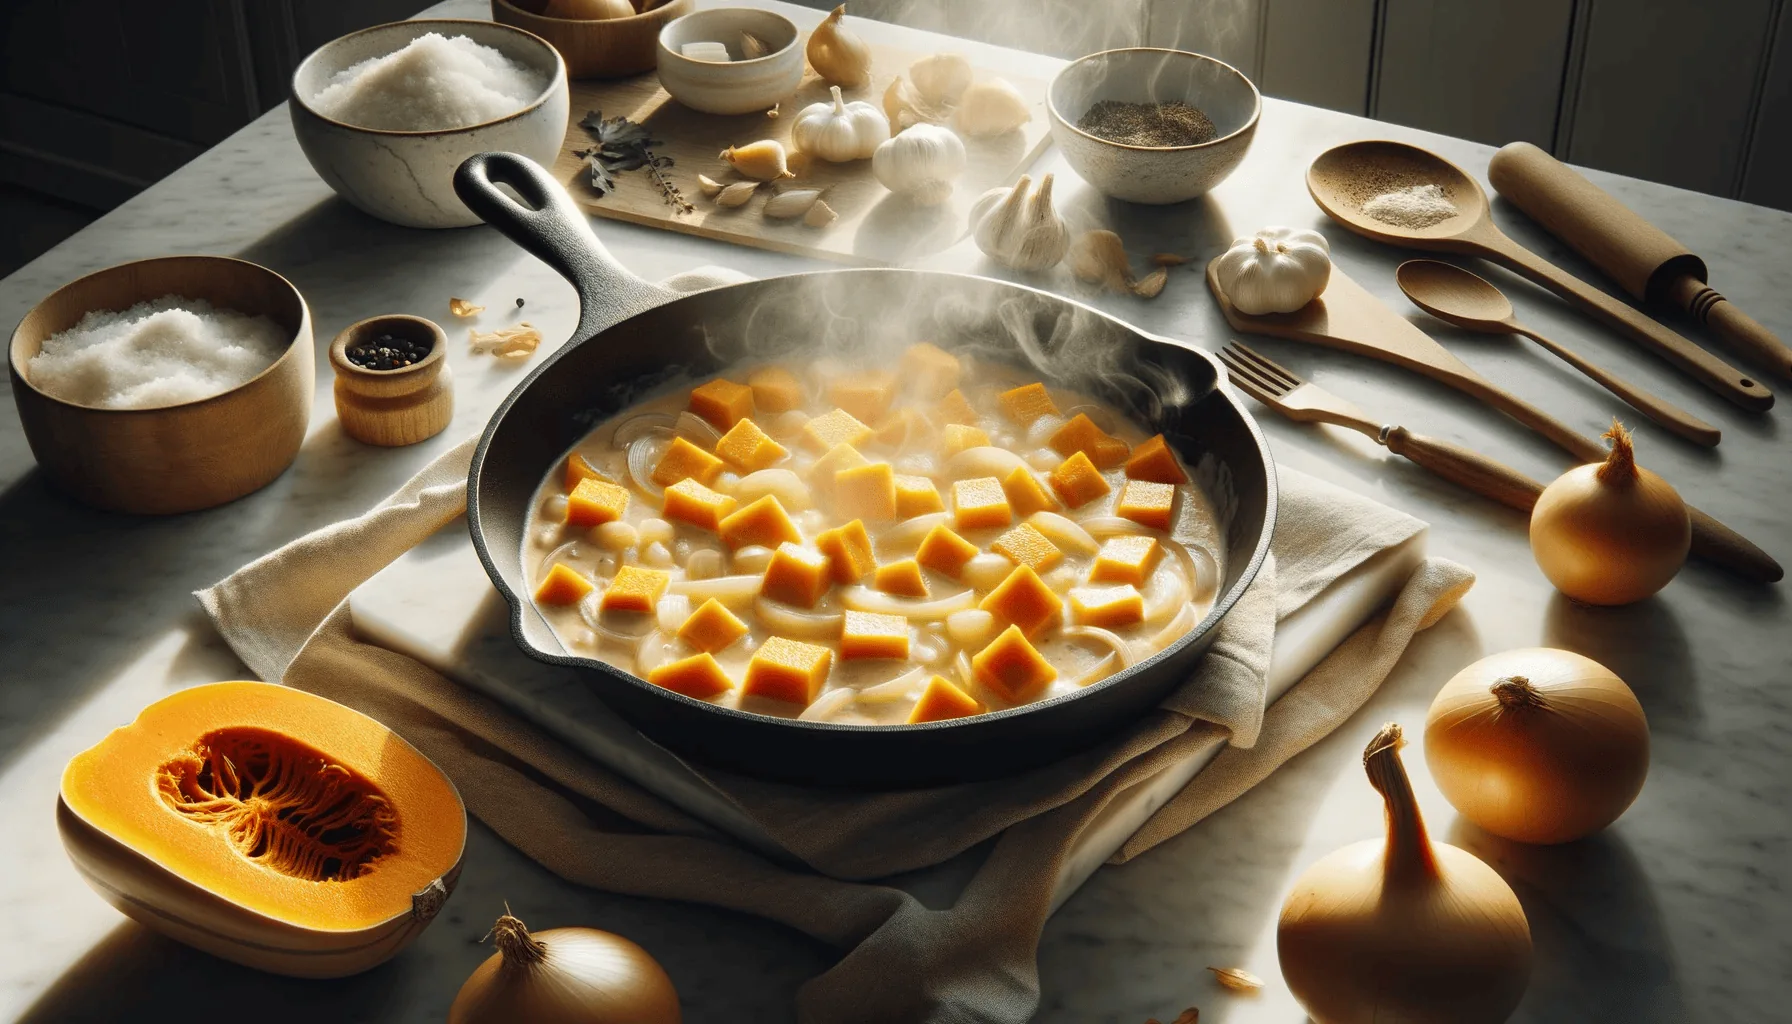 The making of creamy butternut squash casserole